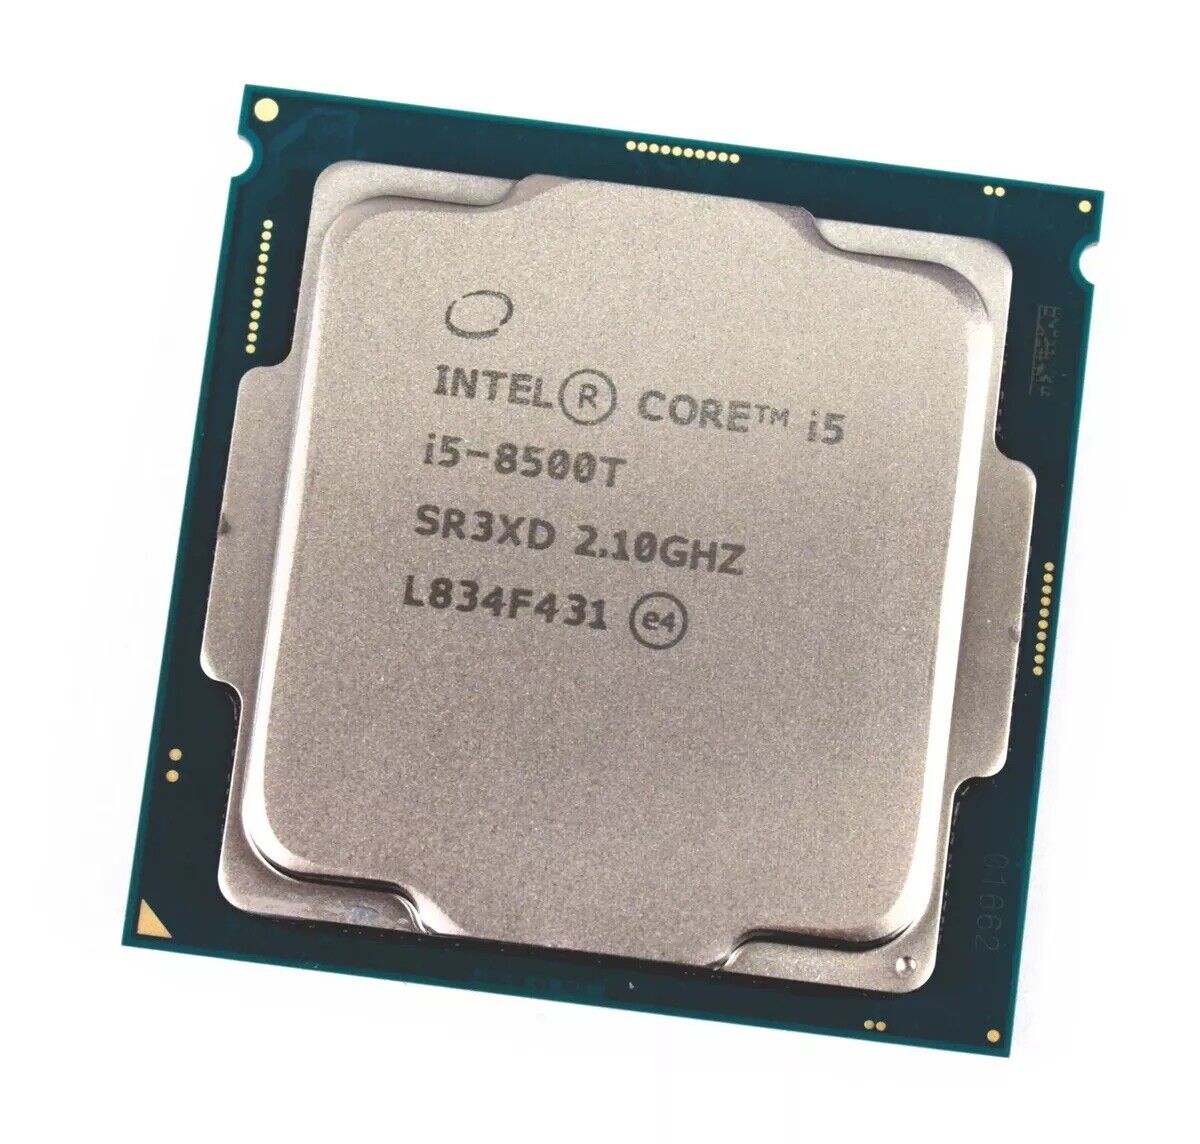 Intel Core i5-8500T (SR3XD) 2.1 GHZ LGA1151  CPU Coffee Lake 1